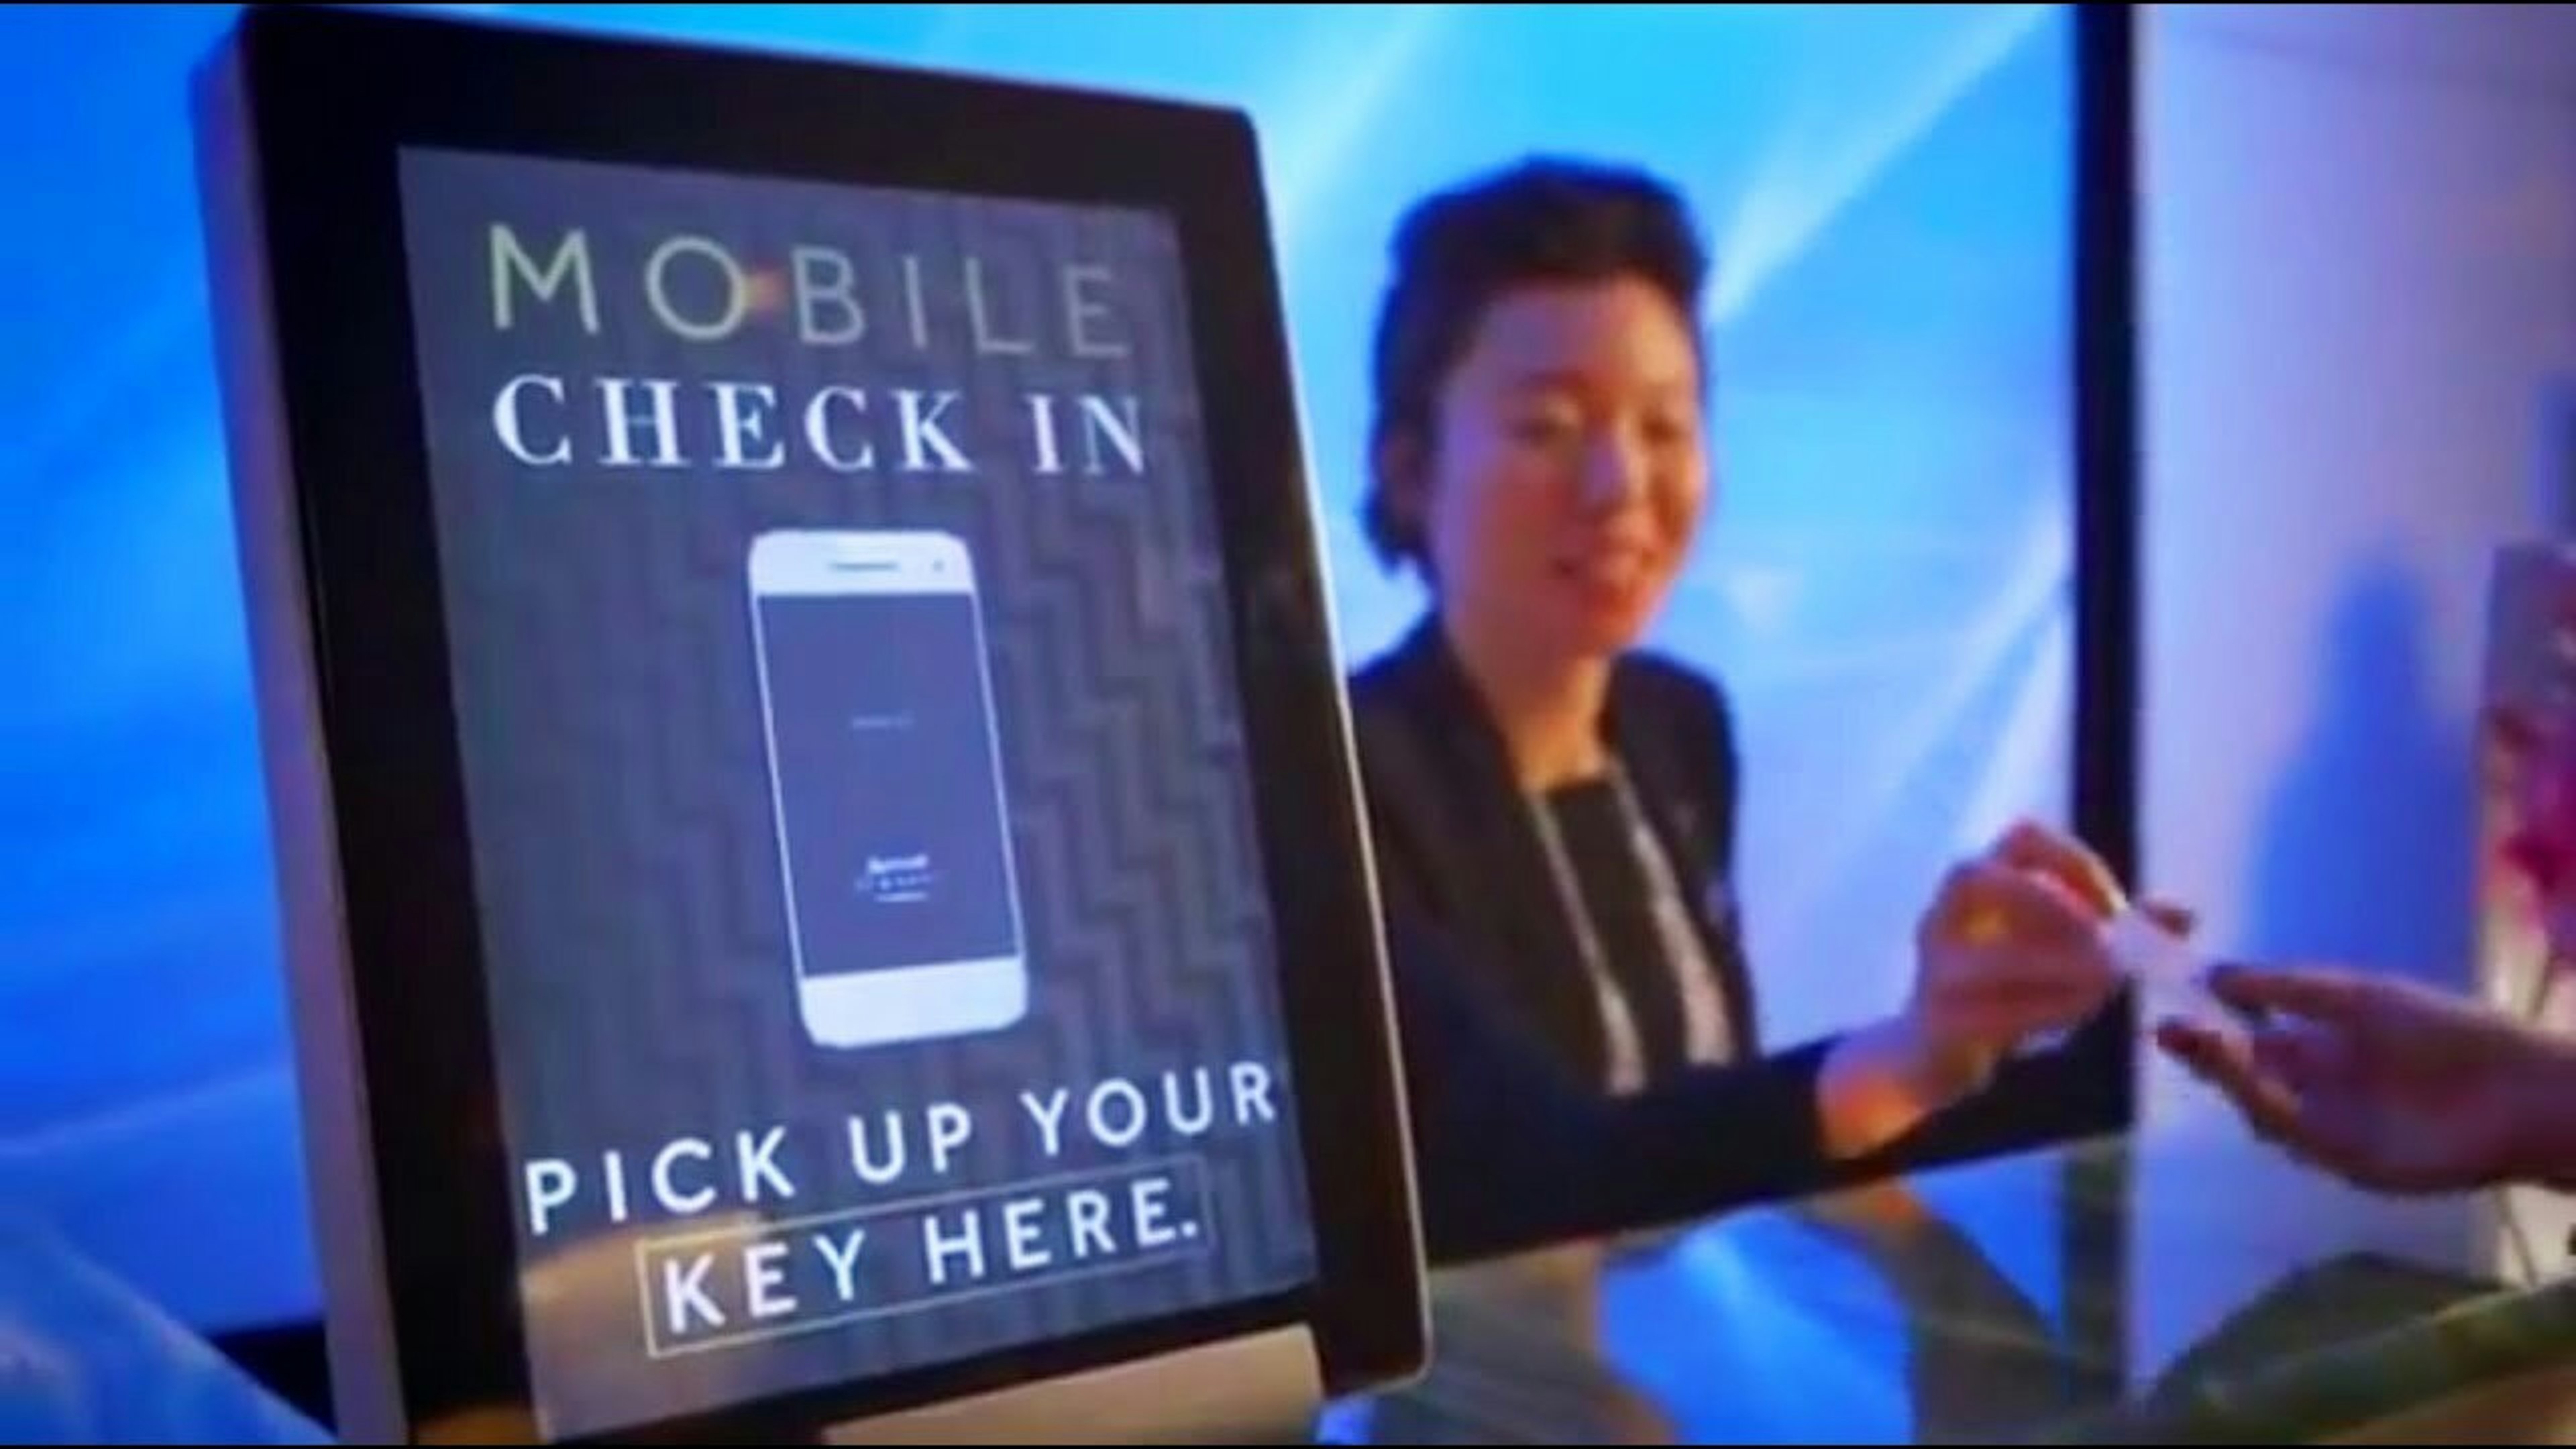 Mobile check-in